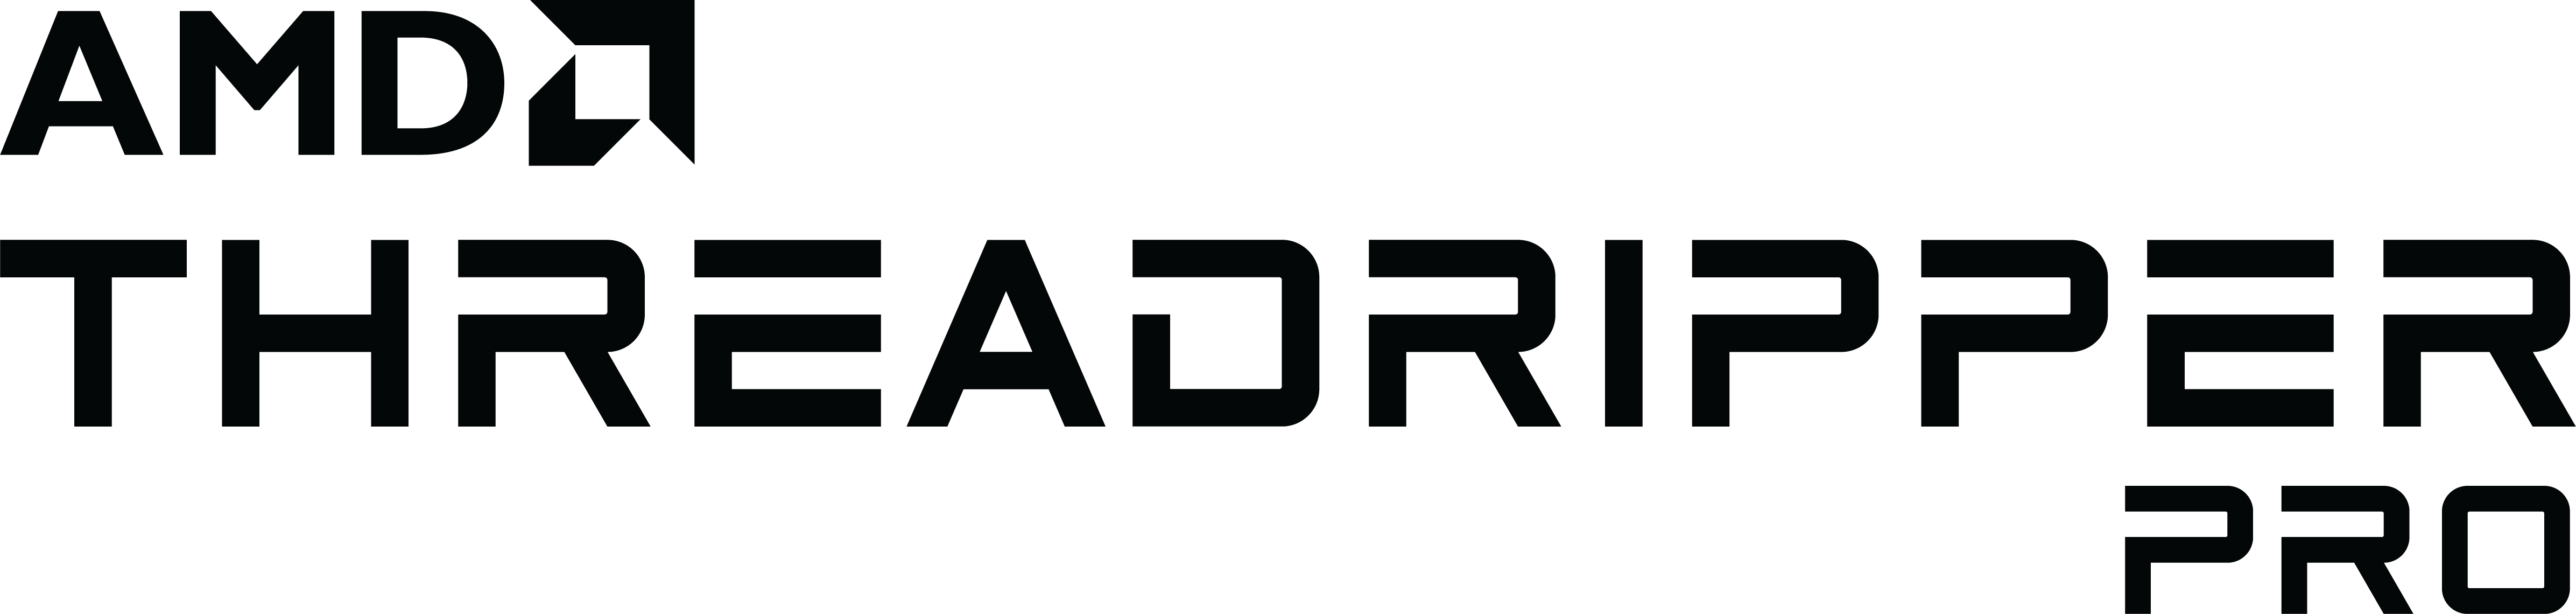 AMD Threadripper PRO Logo